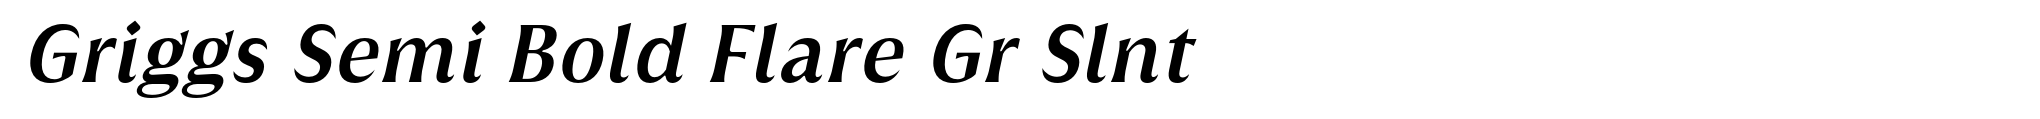 Griggs Semi Bold Flare Gr Slnt image